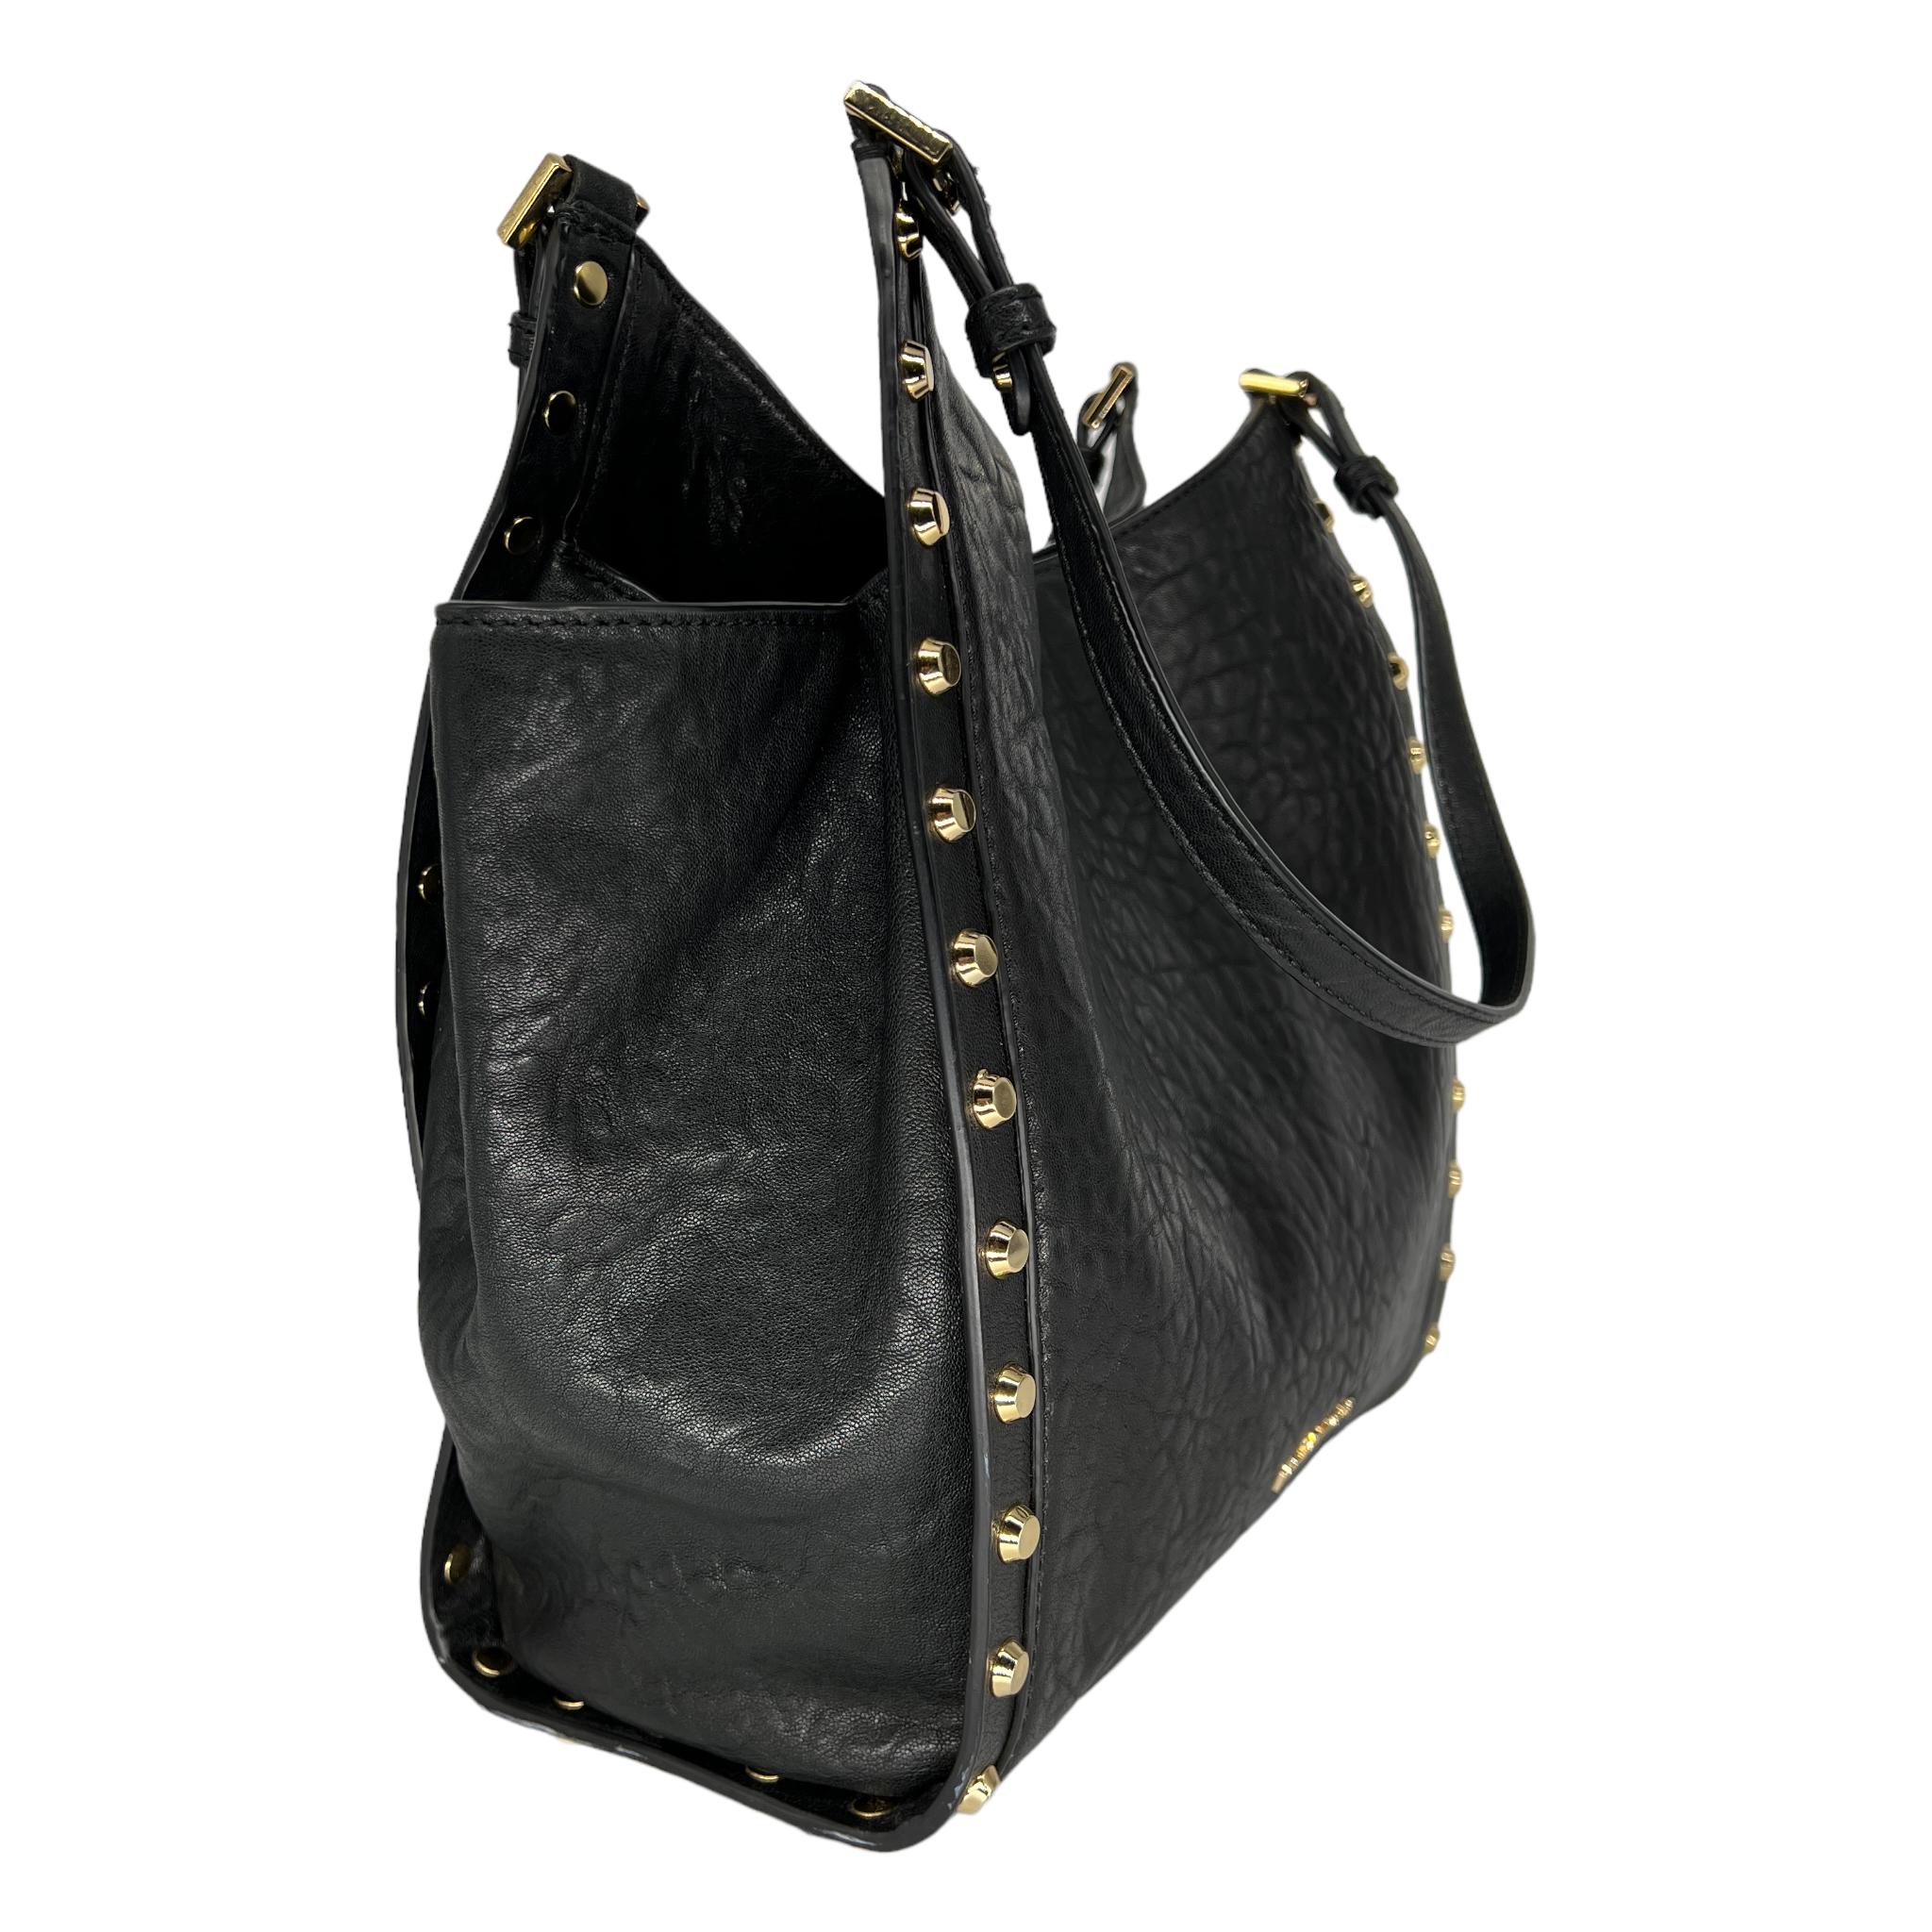 Beautiful silver studded Michael Kors handbag - Women's handbags